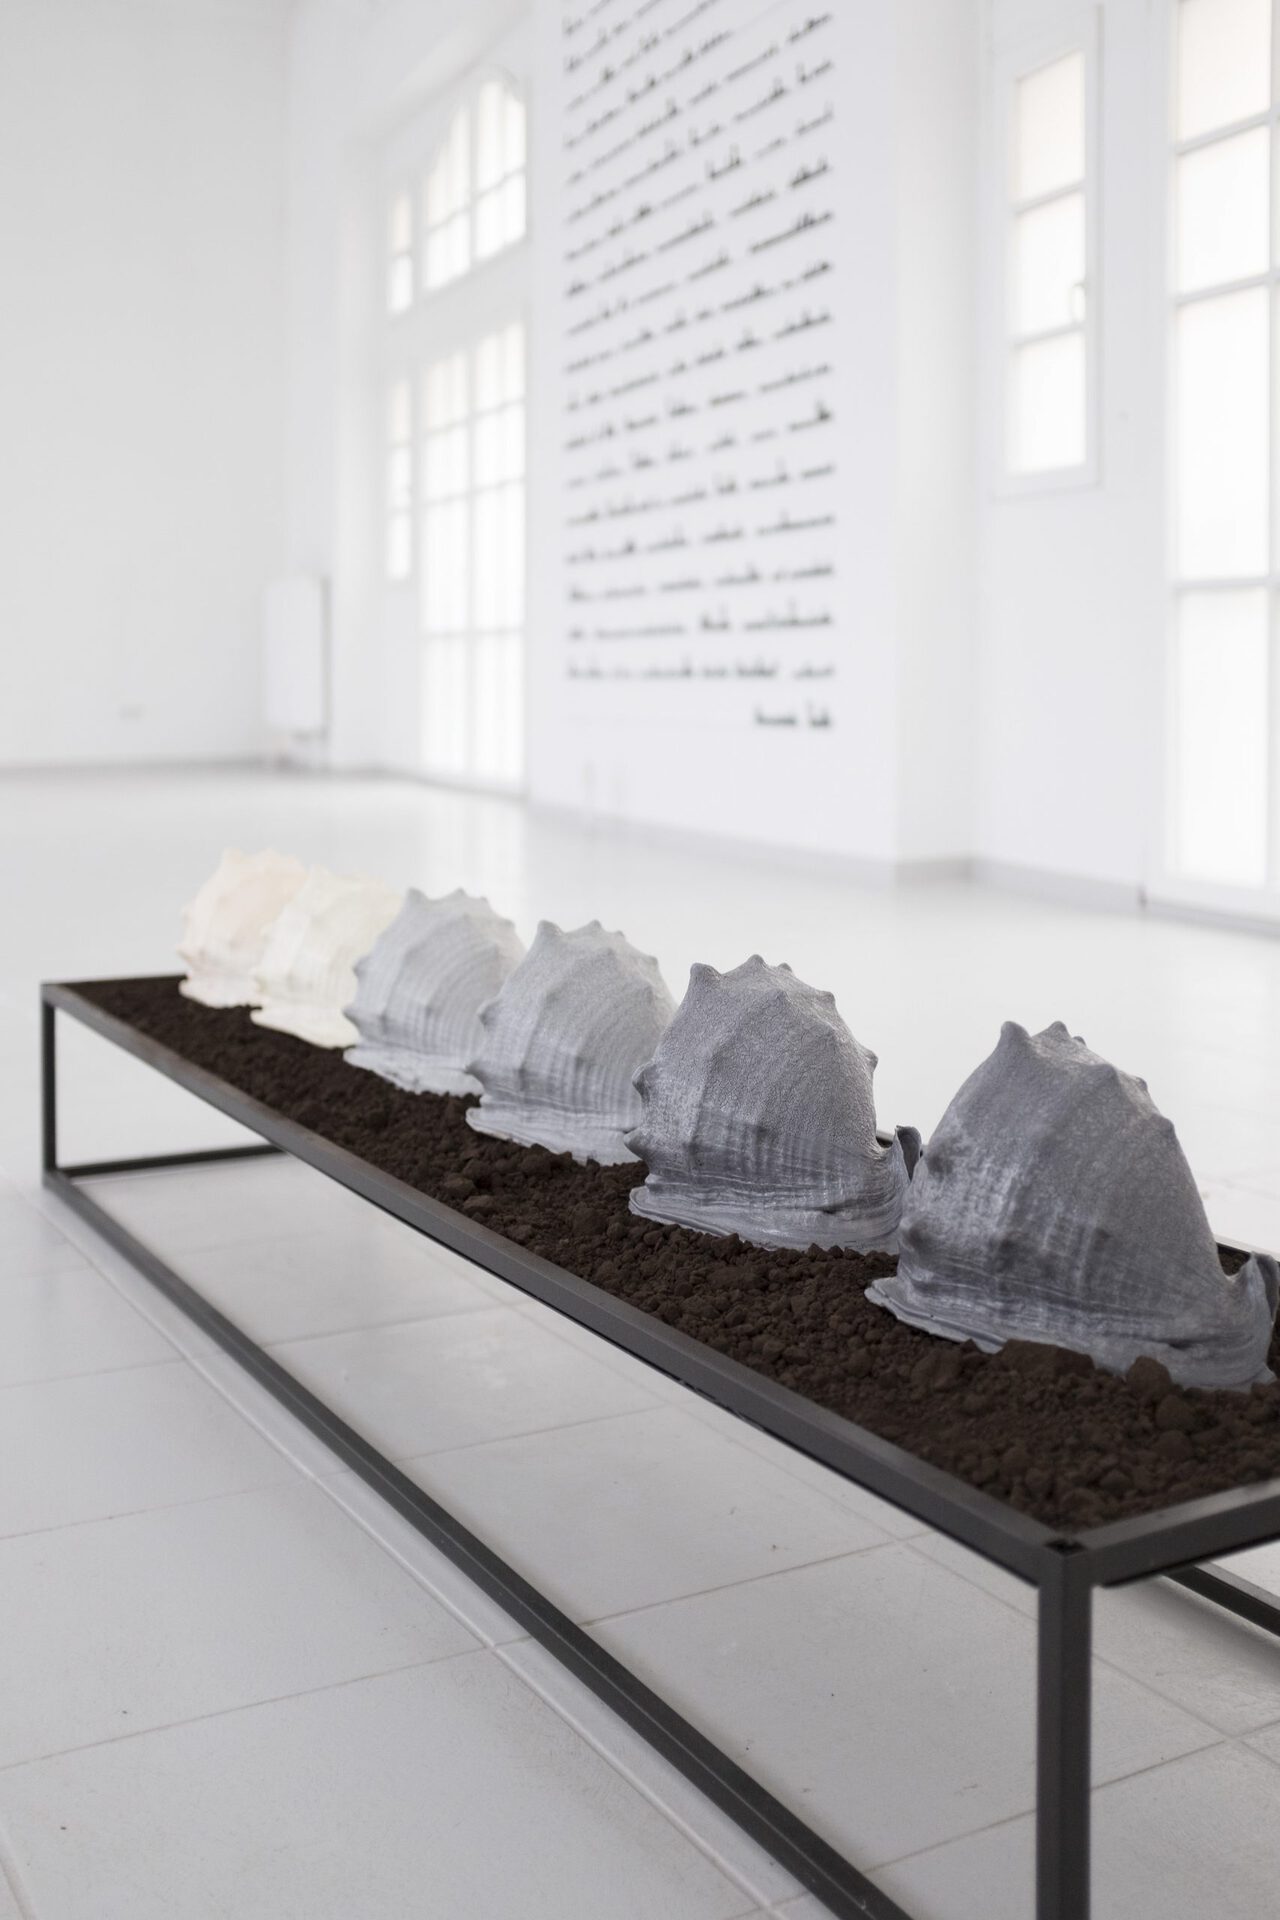 Katharina Gahlert, Listening to Shells, 6 imitation snail shells made of PU plastic, raw lignite, Steel stand, 50cm x40cm x170cm